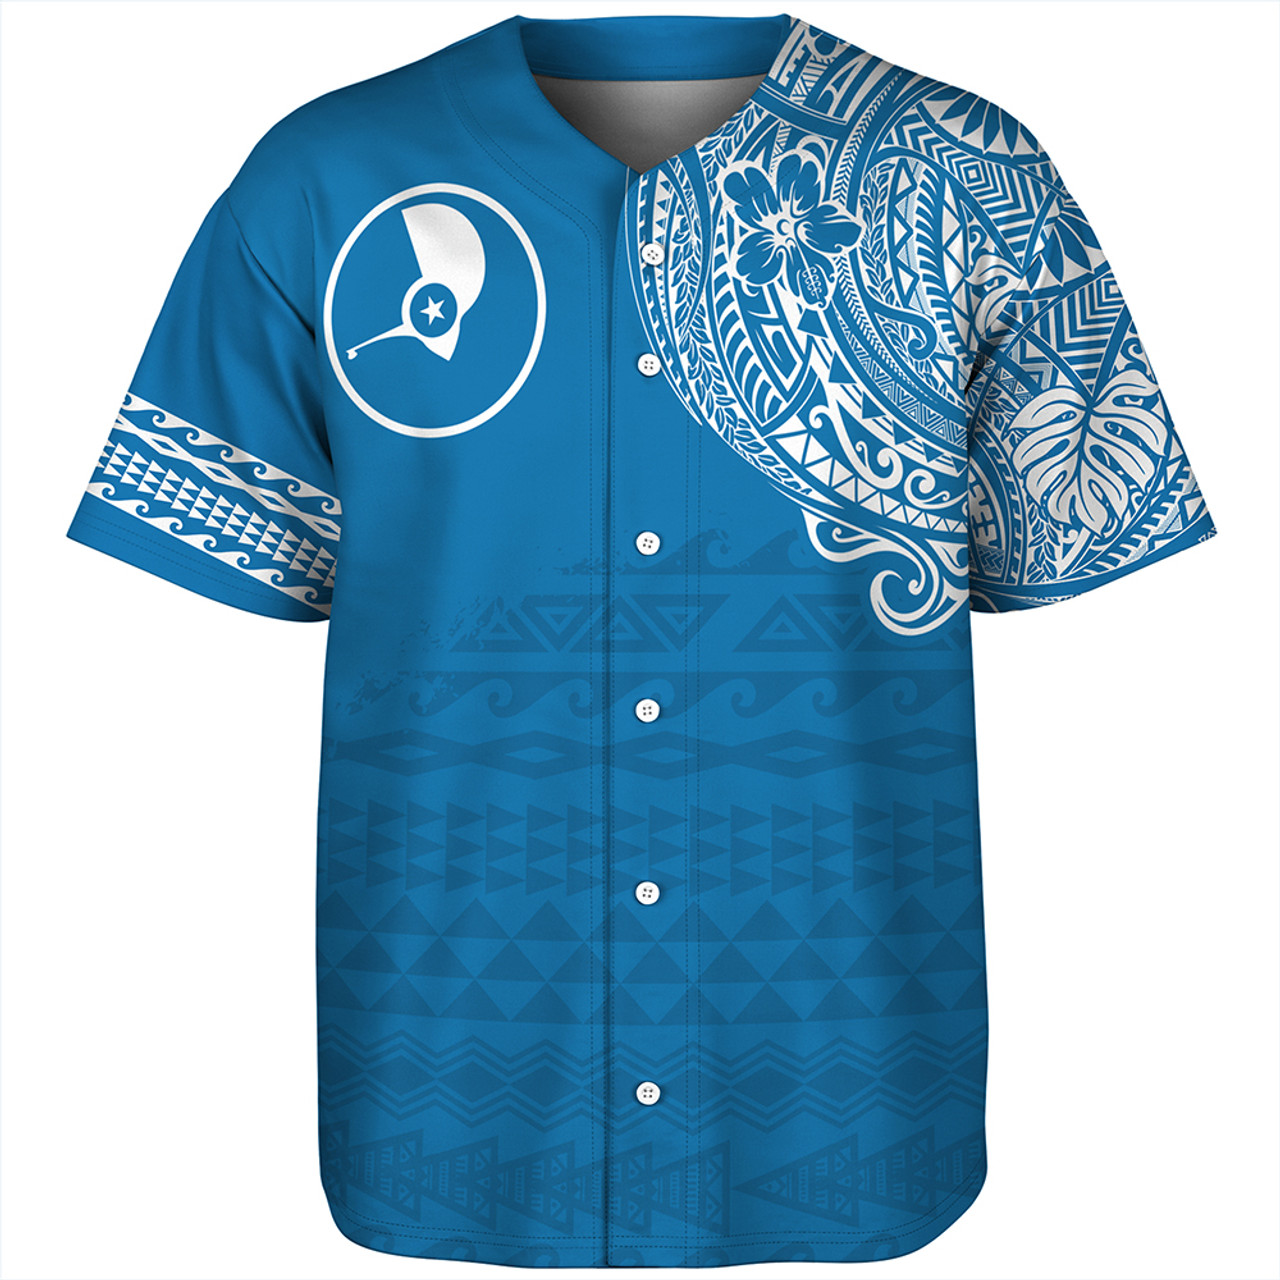 Yap State Baseball Shirt Polynesian Flag With Coat Of Arms